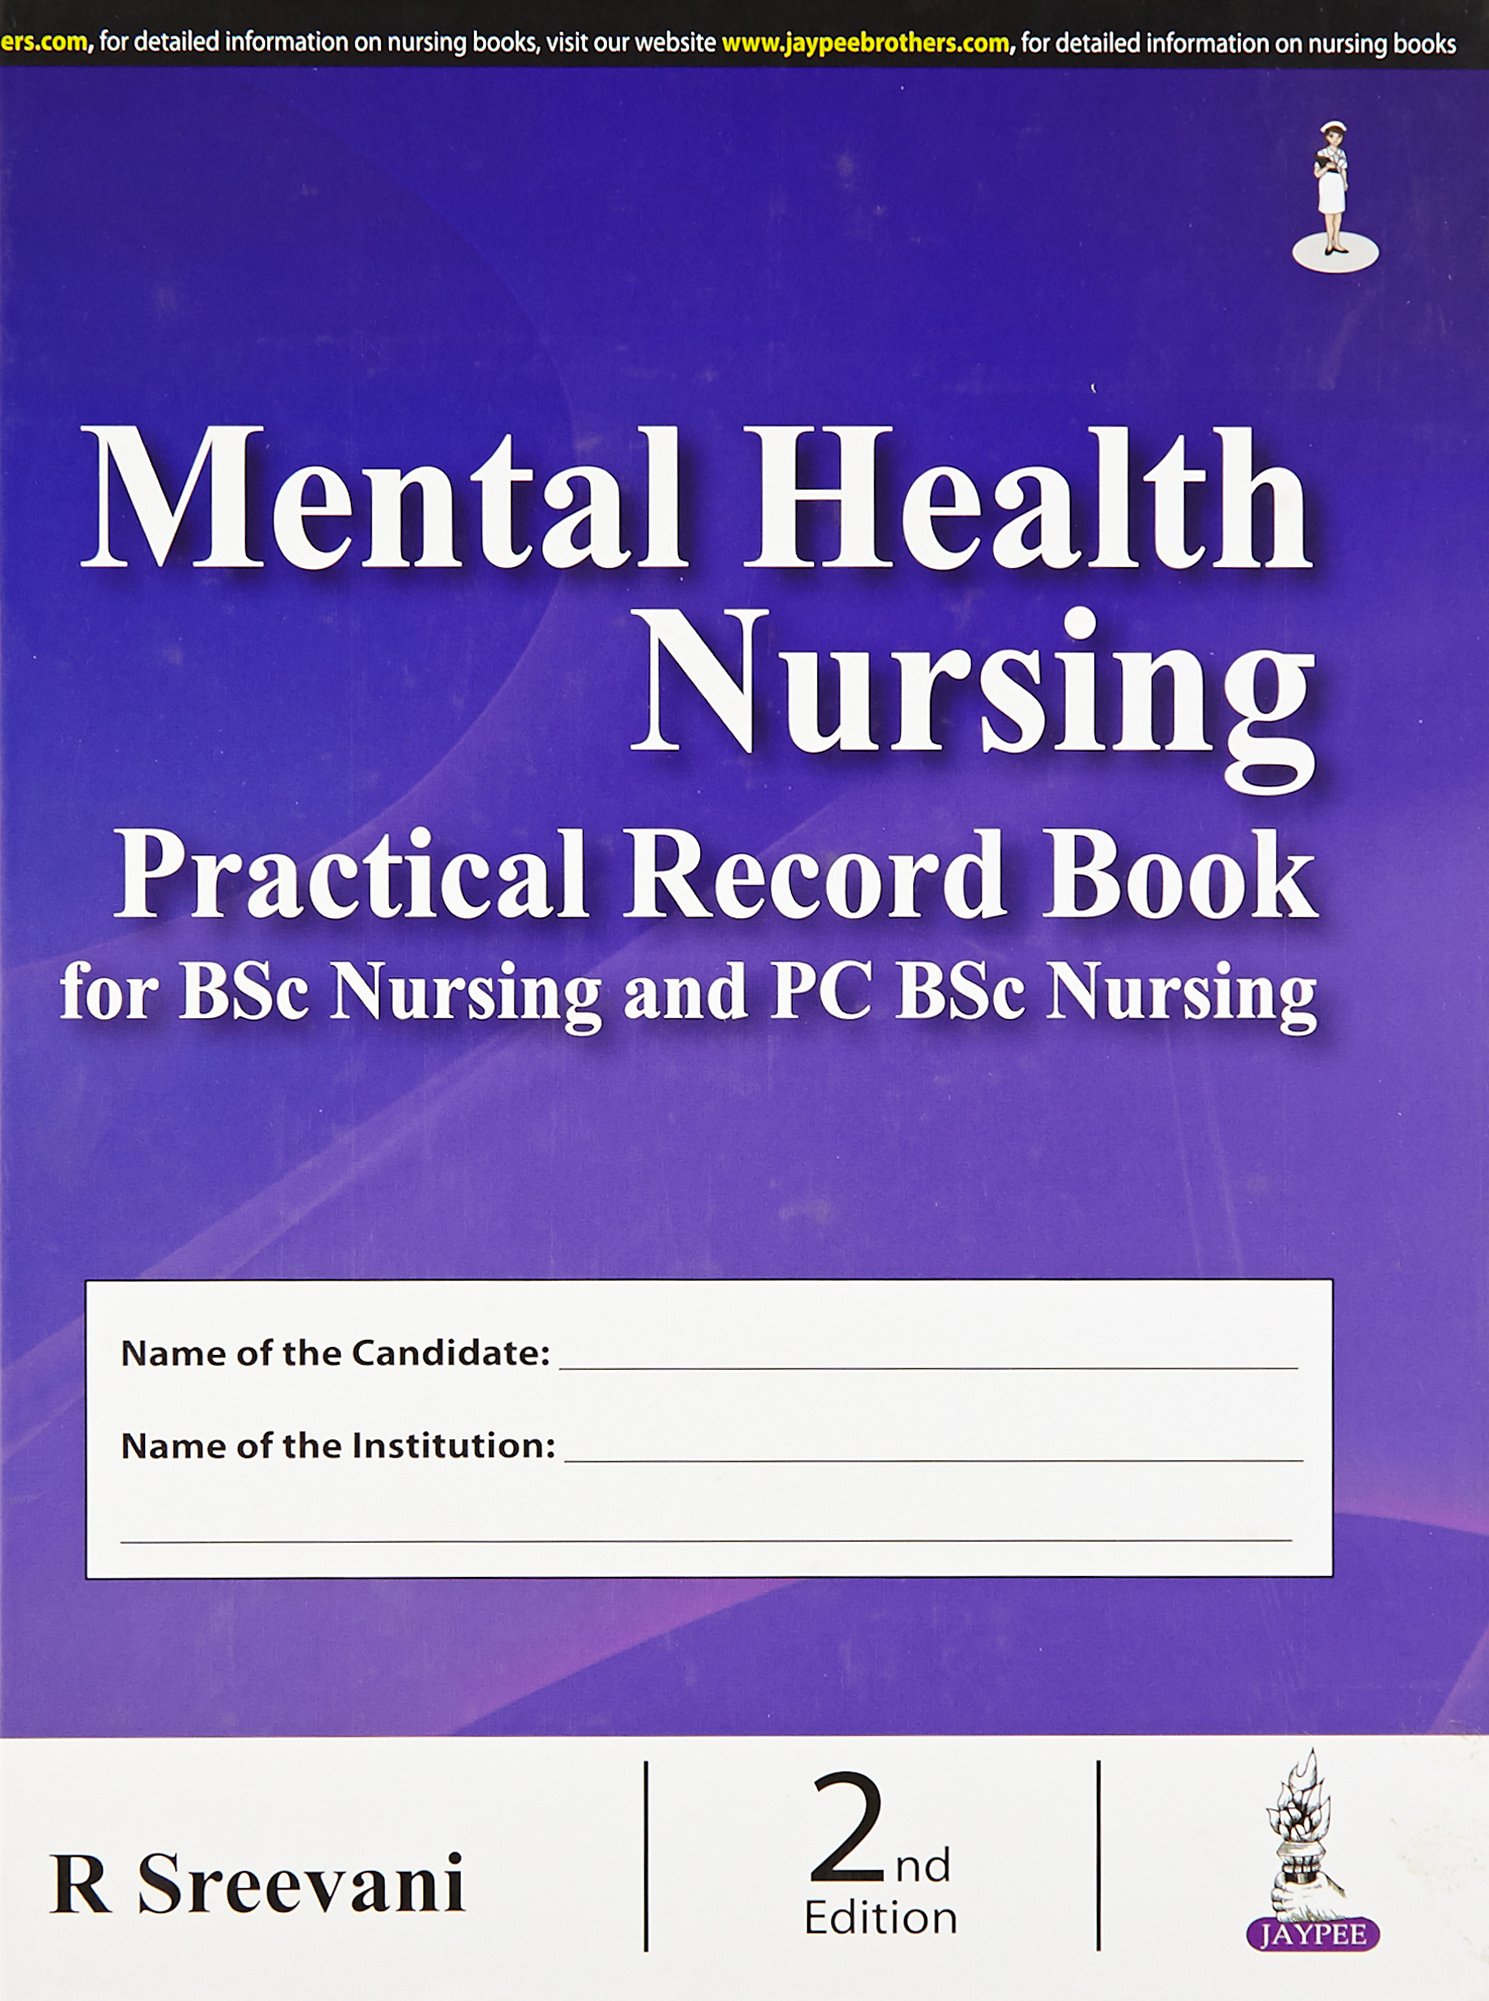 Mental Health Nursing Practical Record Book For Bsc Nursing And Pc Bsc Nursing